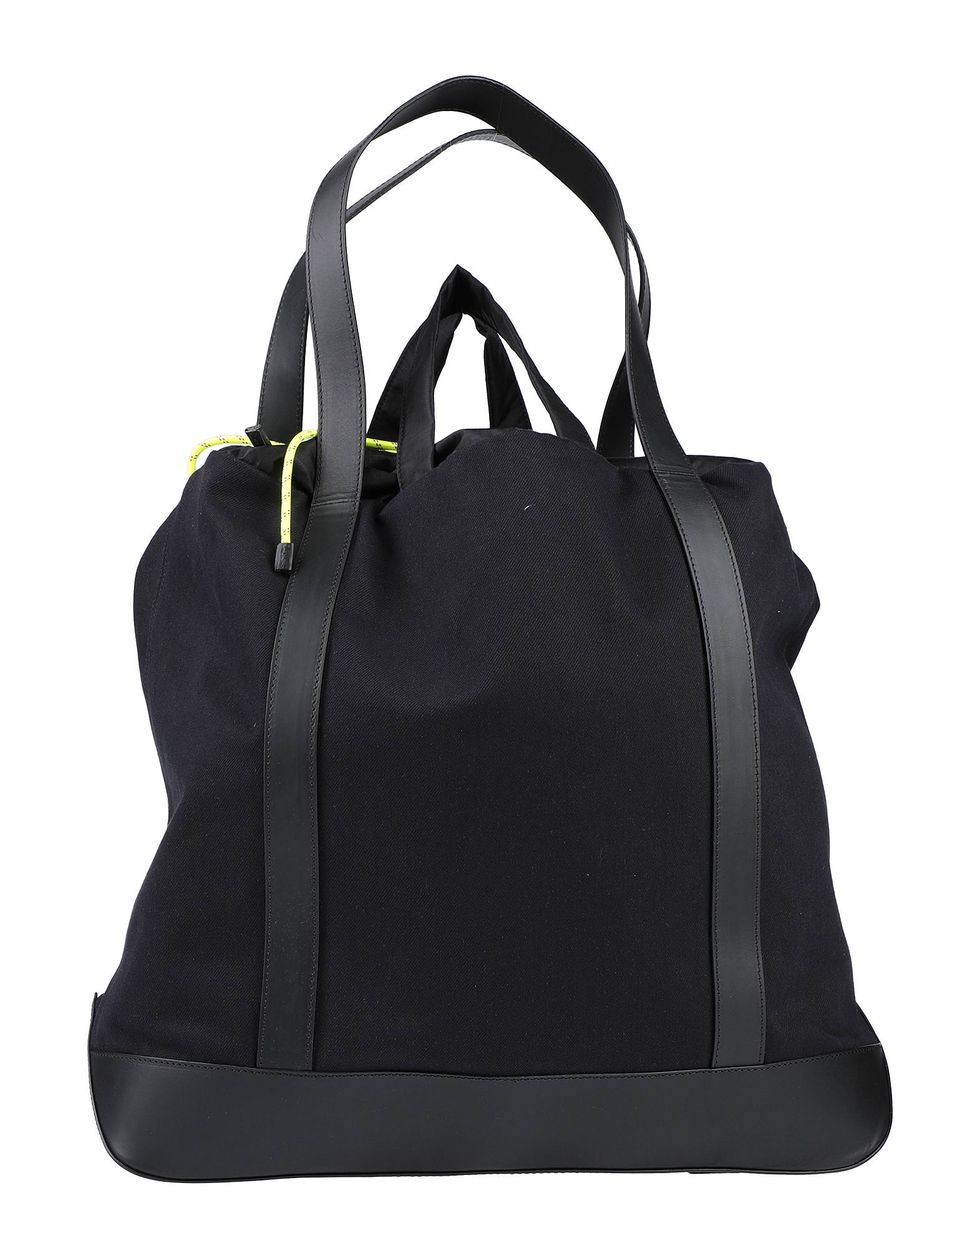 Bag, Handbag, Black, Product, Fashion accessory, Luggage and bags, Shoulder bag, Tote bag, Leather, Diaper bag, 